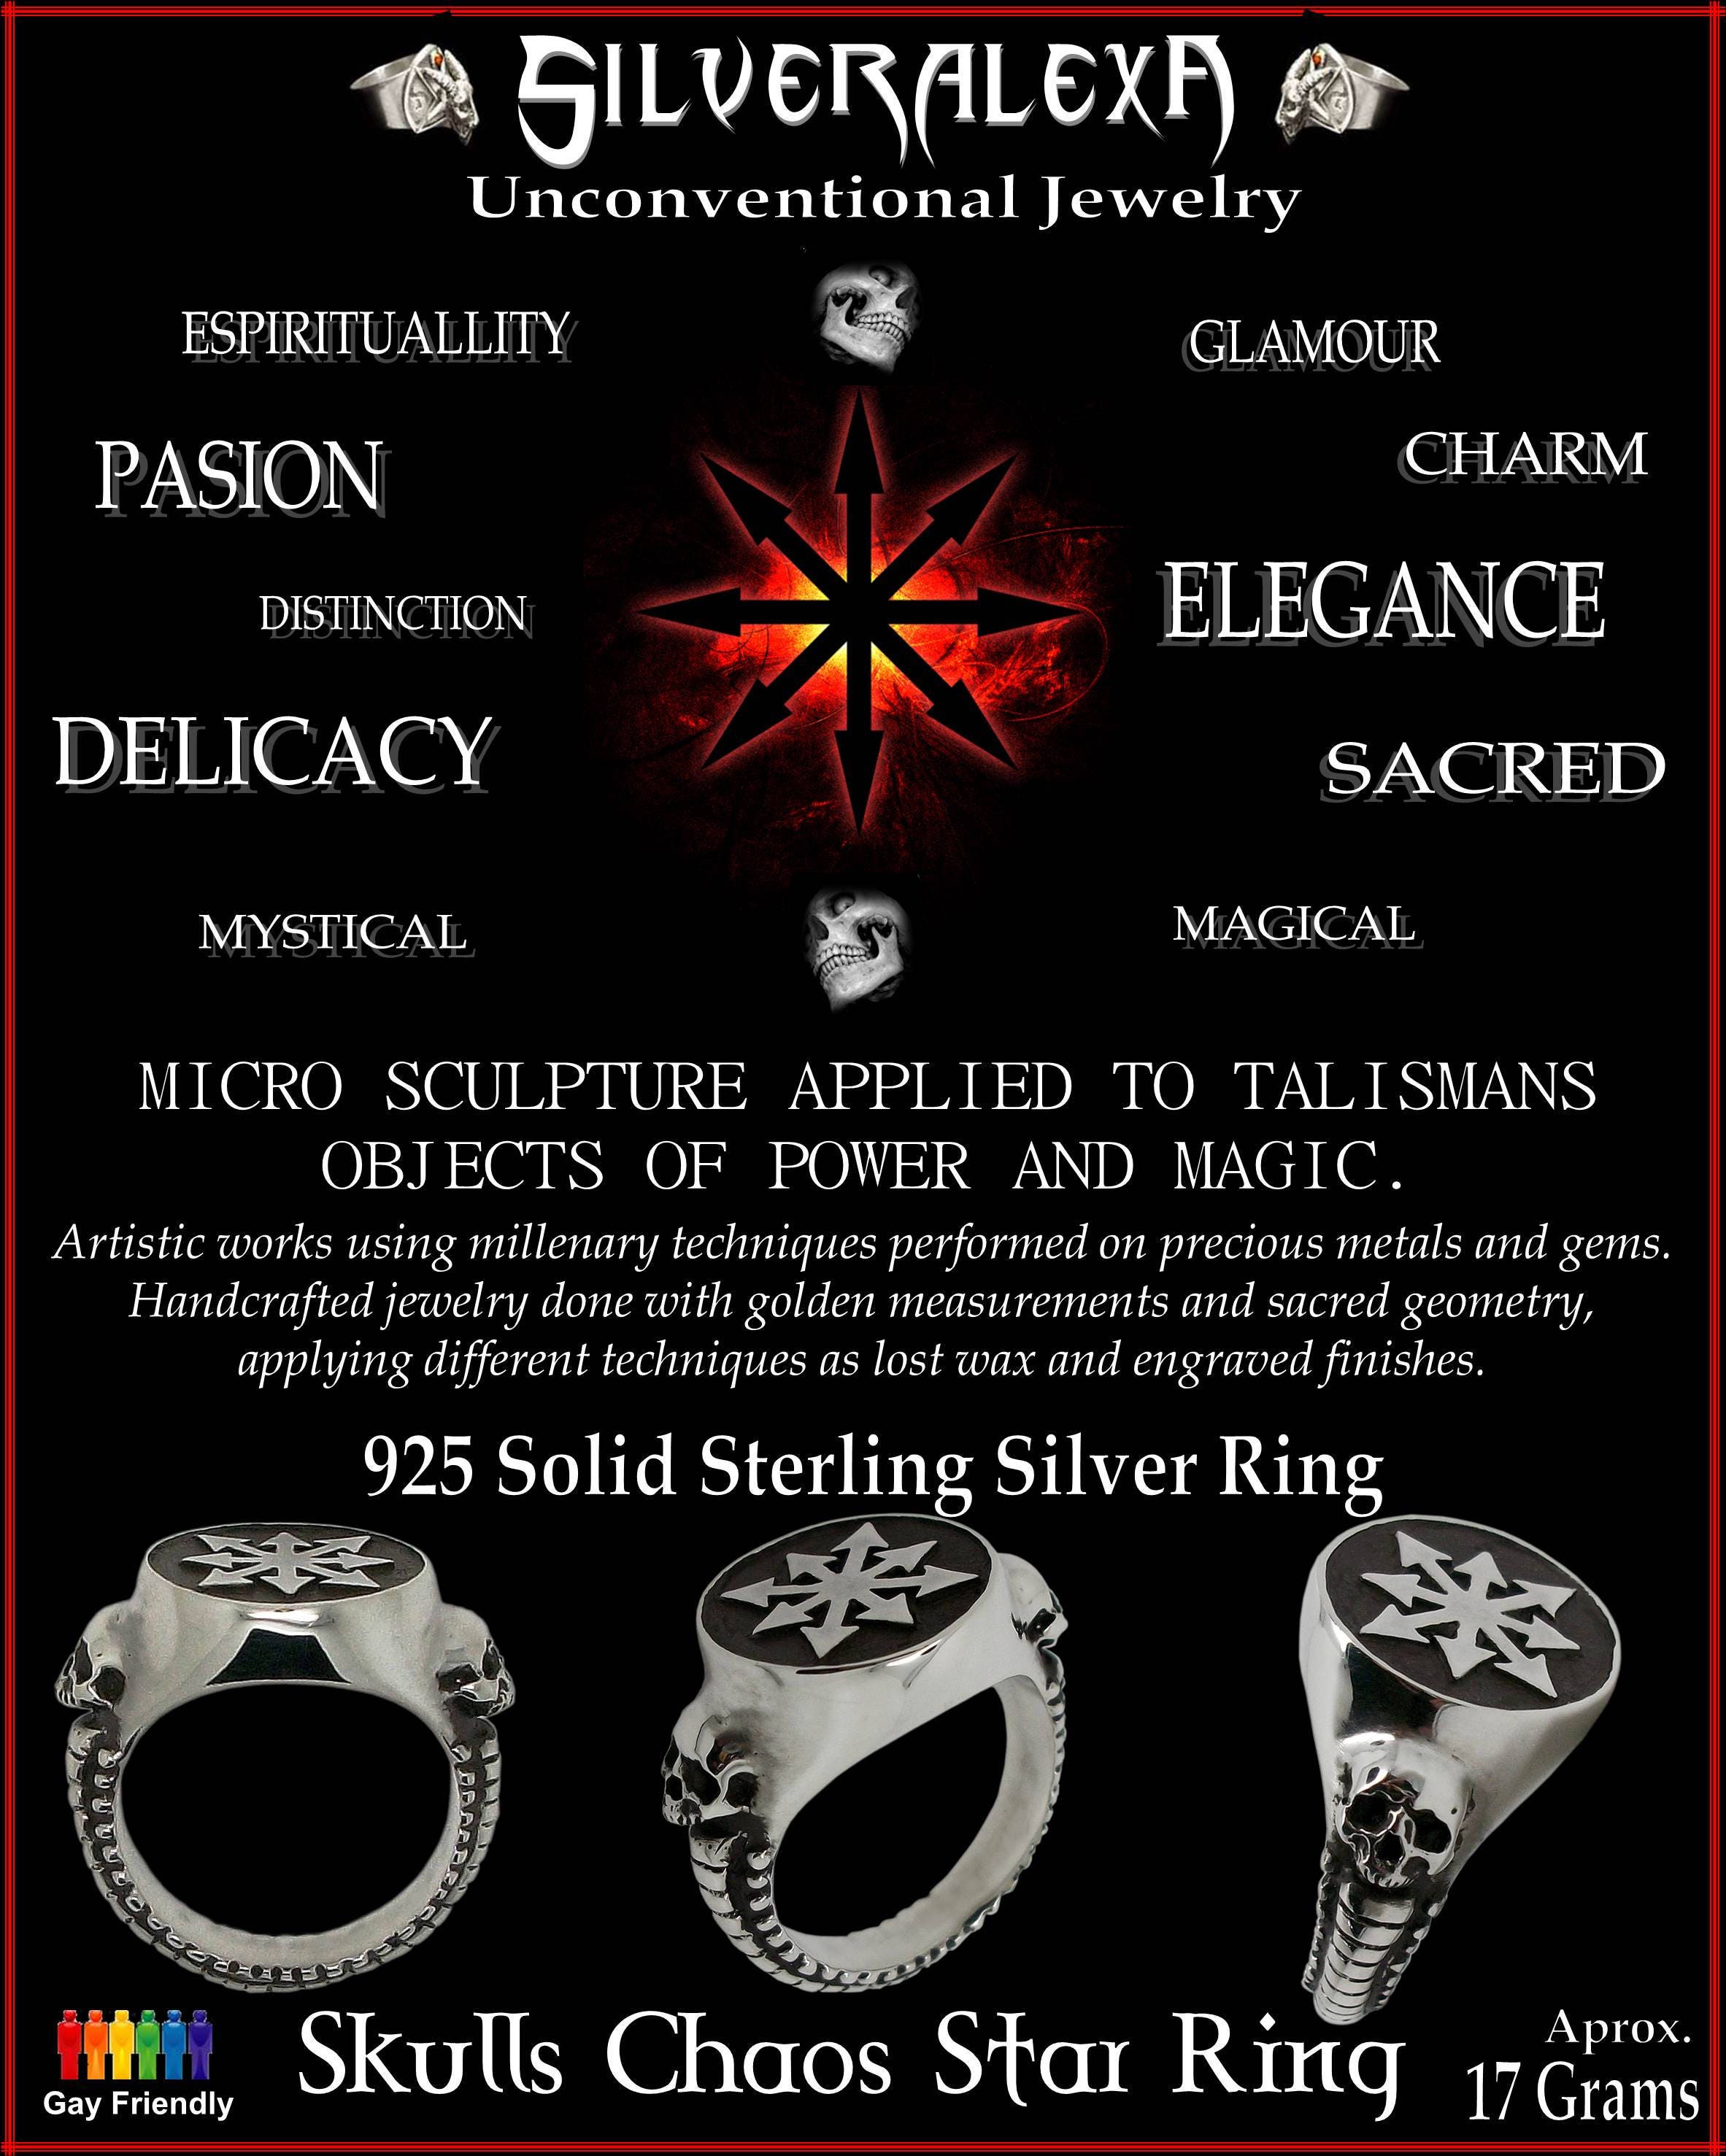 Skull ring - Sterling Silver Skull Chaos Ring -  ALL SIZES - Chaos Star